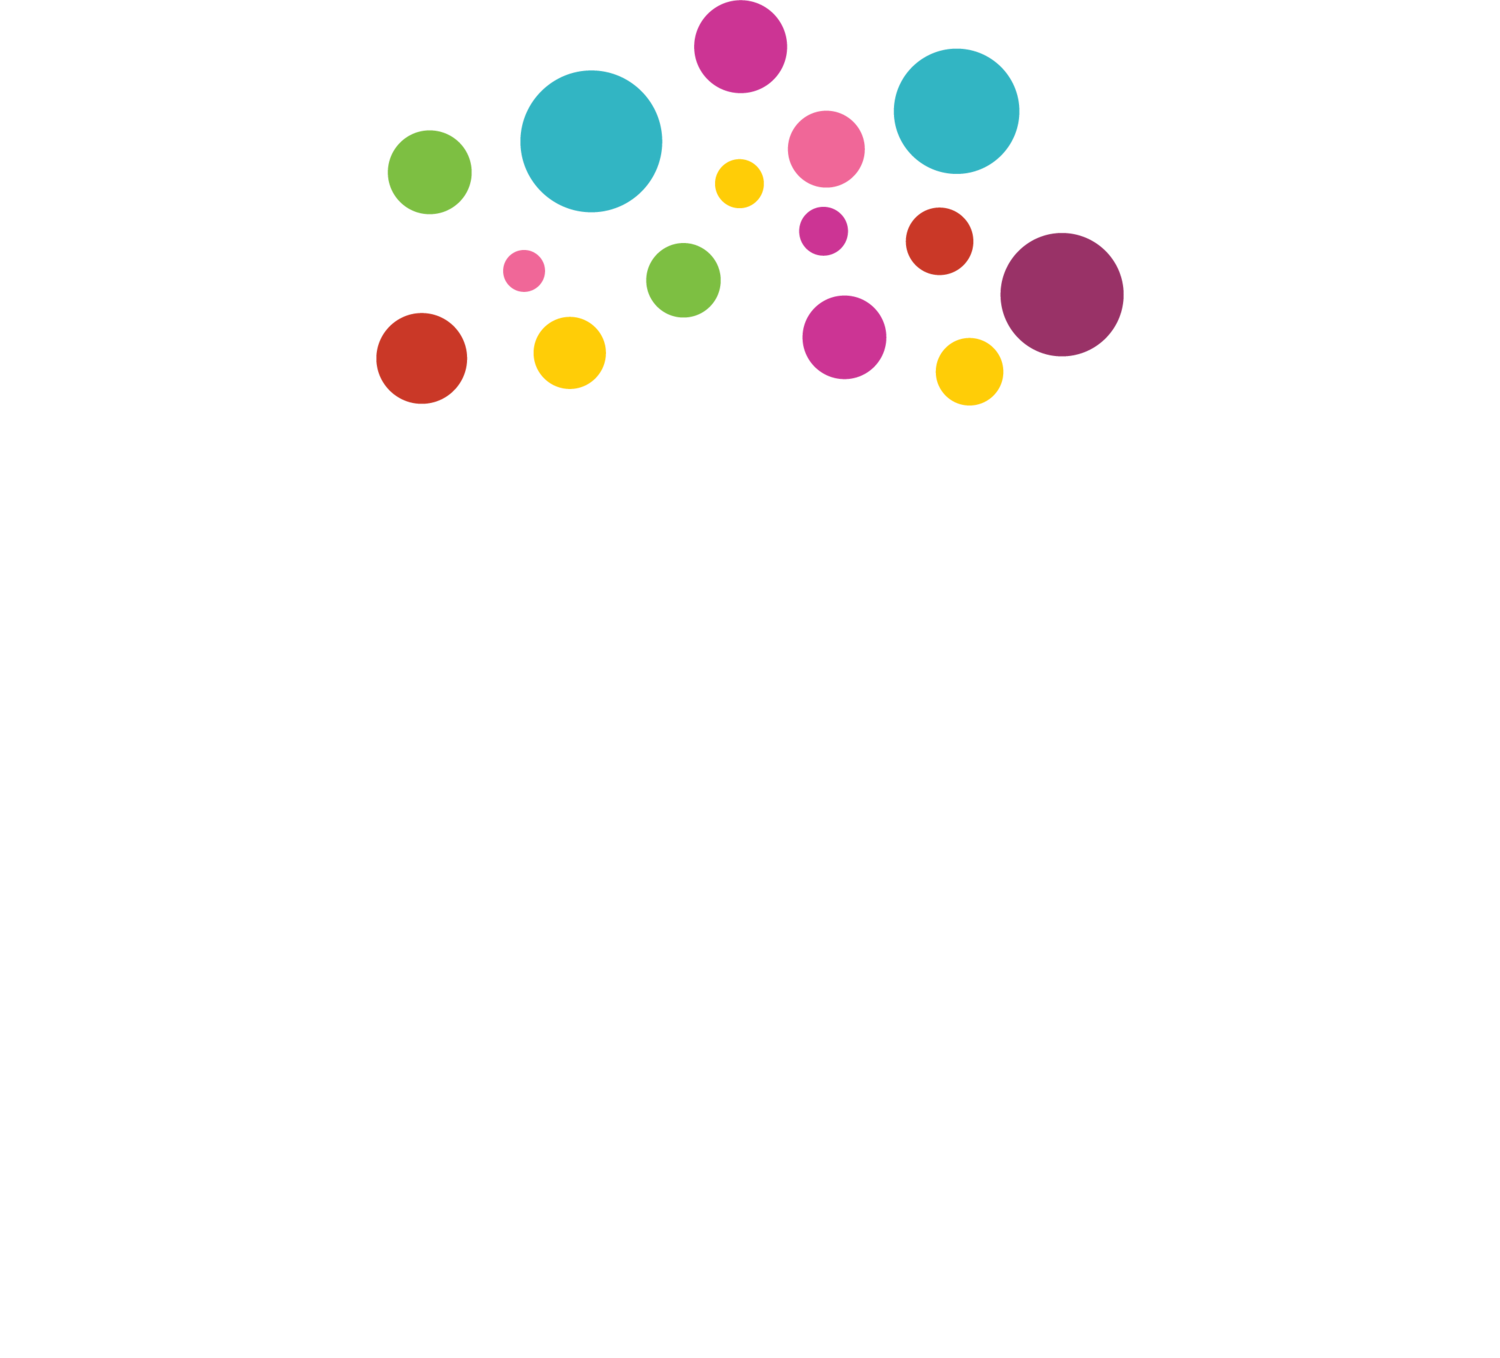 Play N Learn